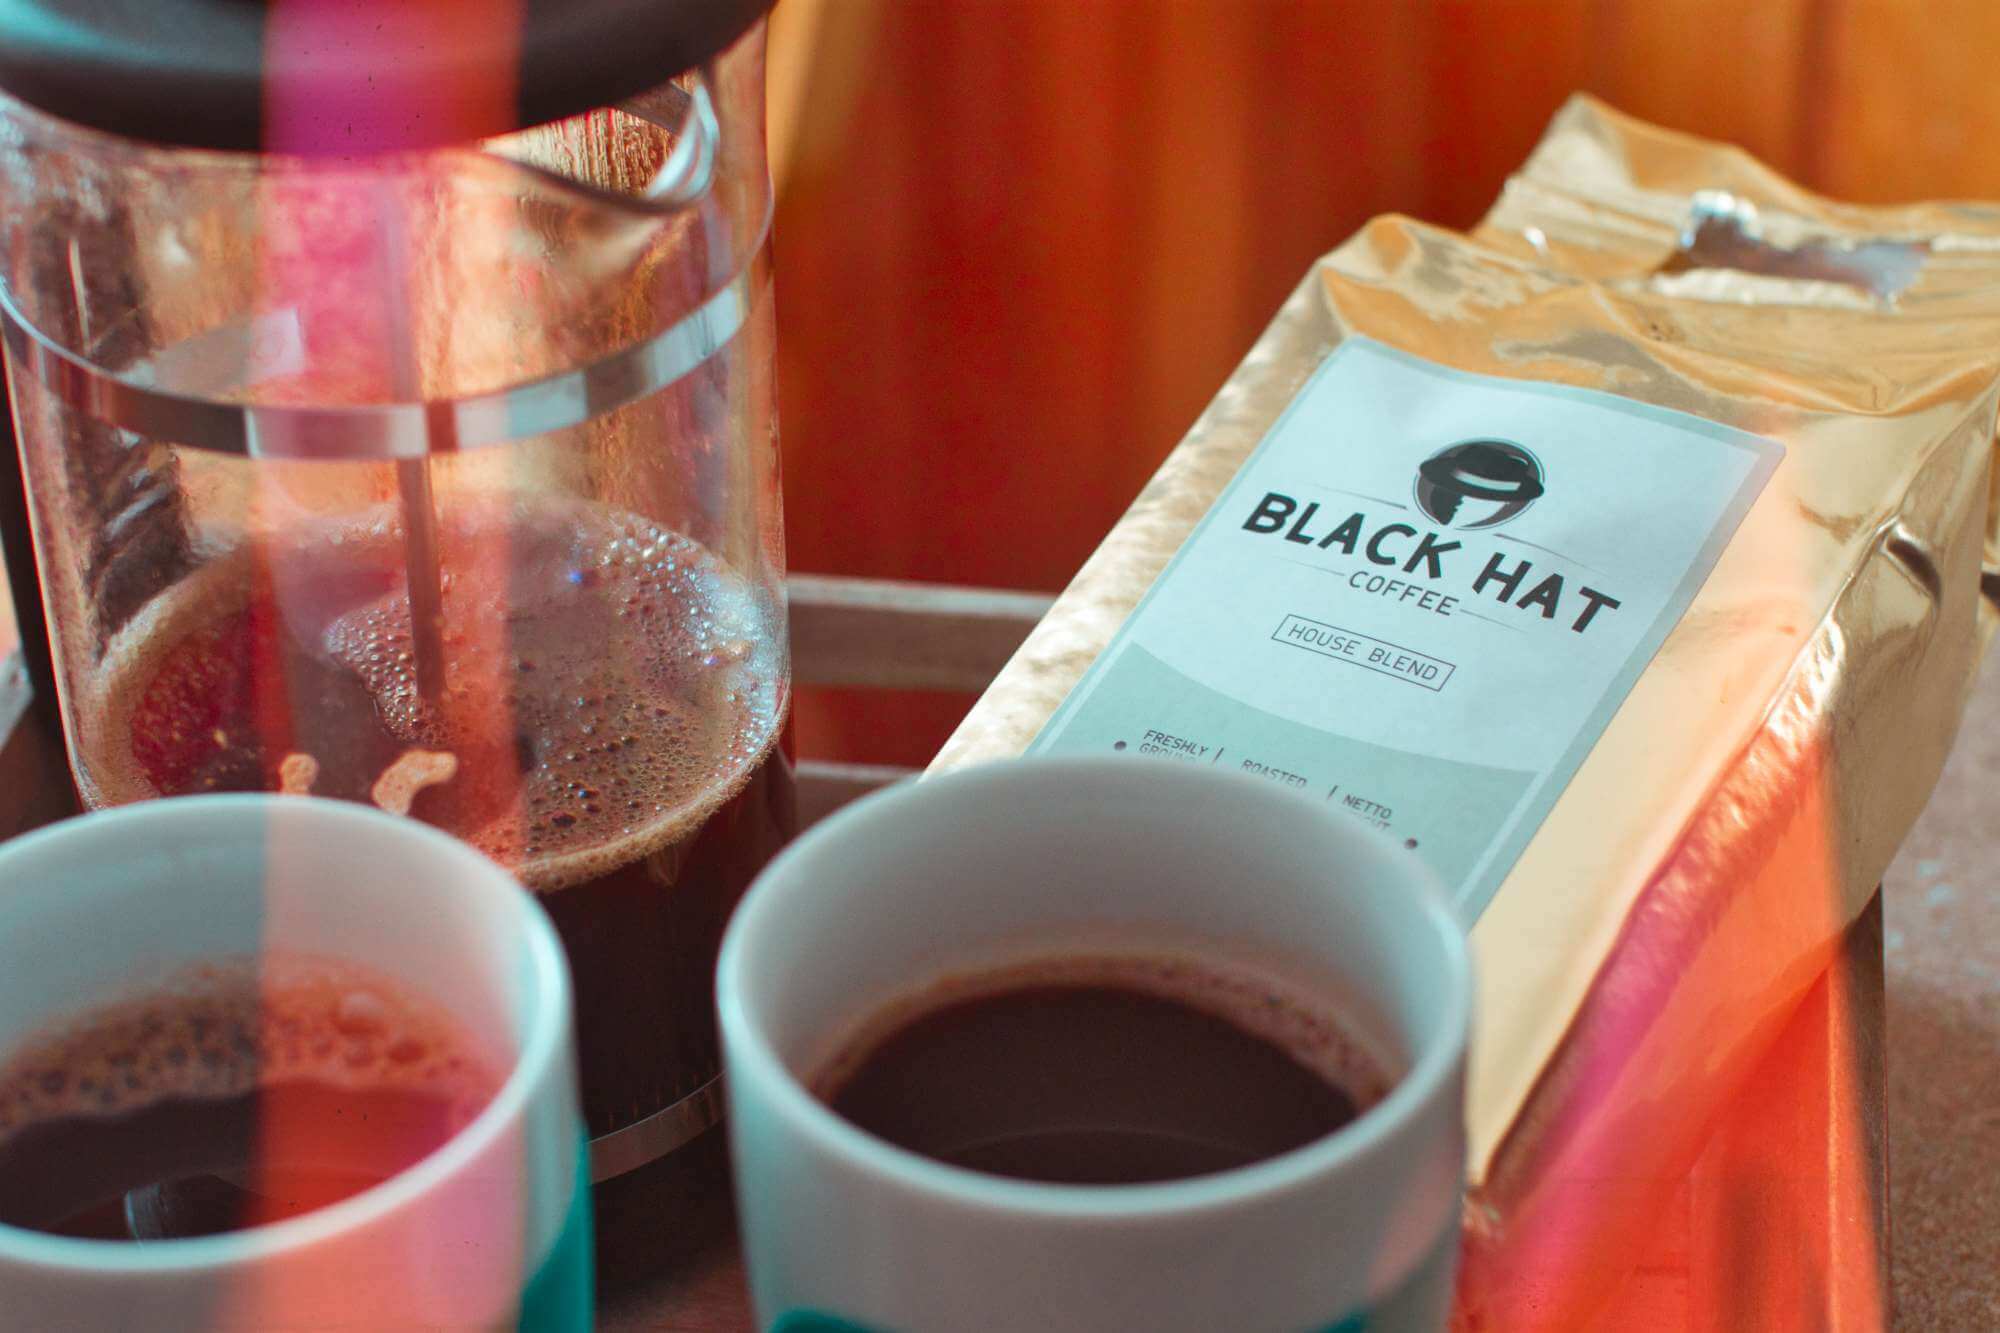 Black Hat Coffee House Blend Test